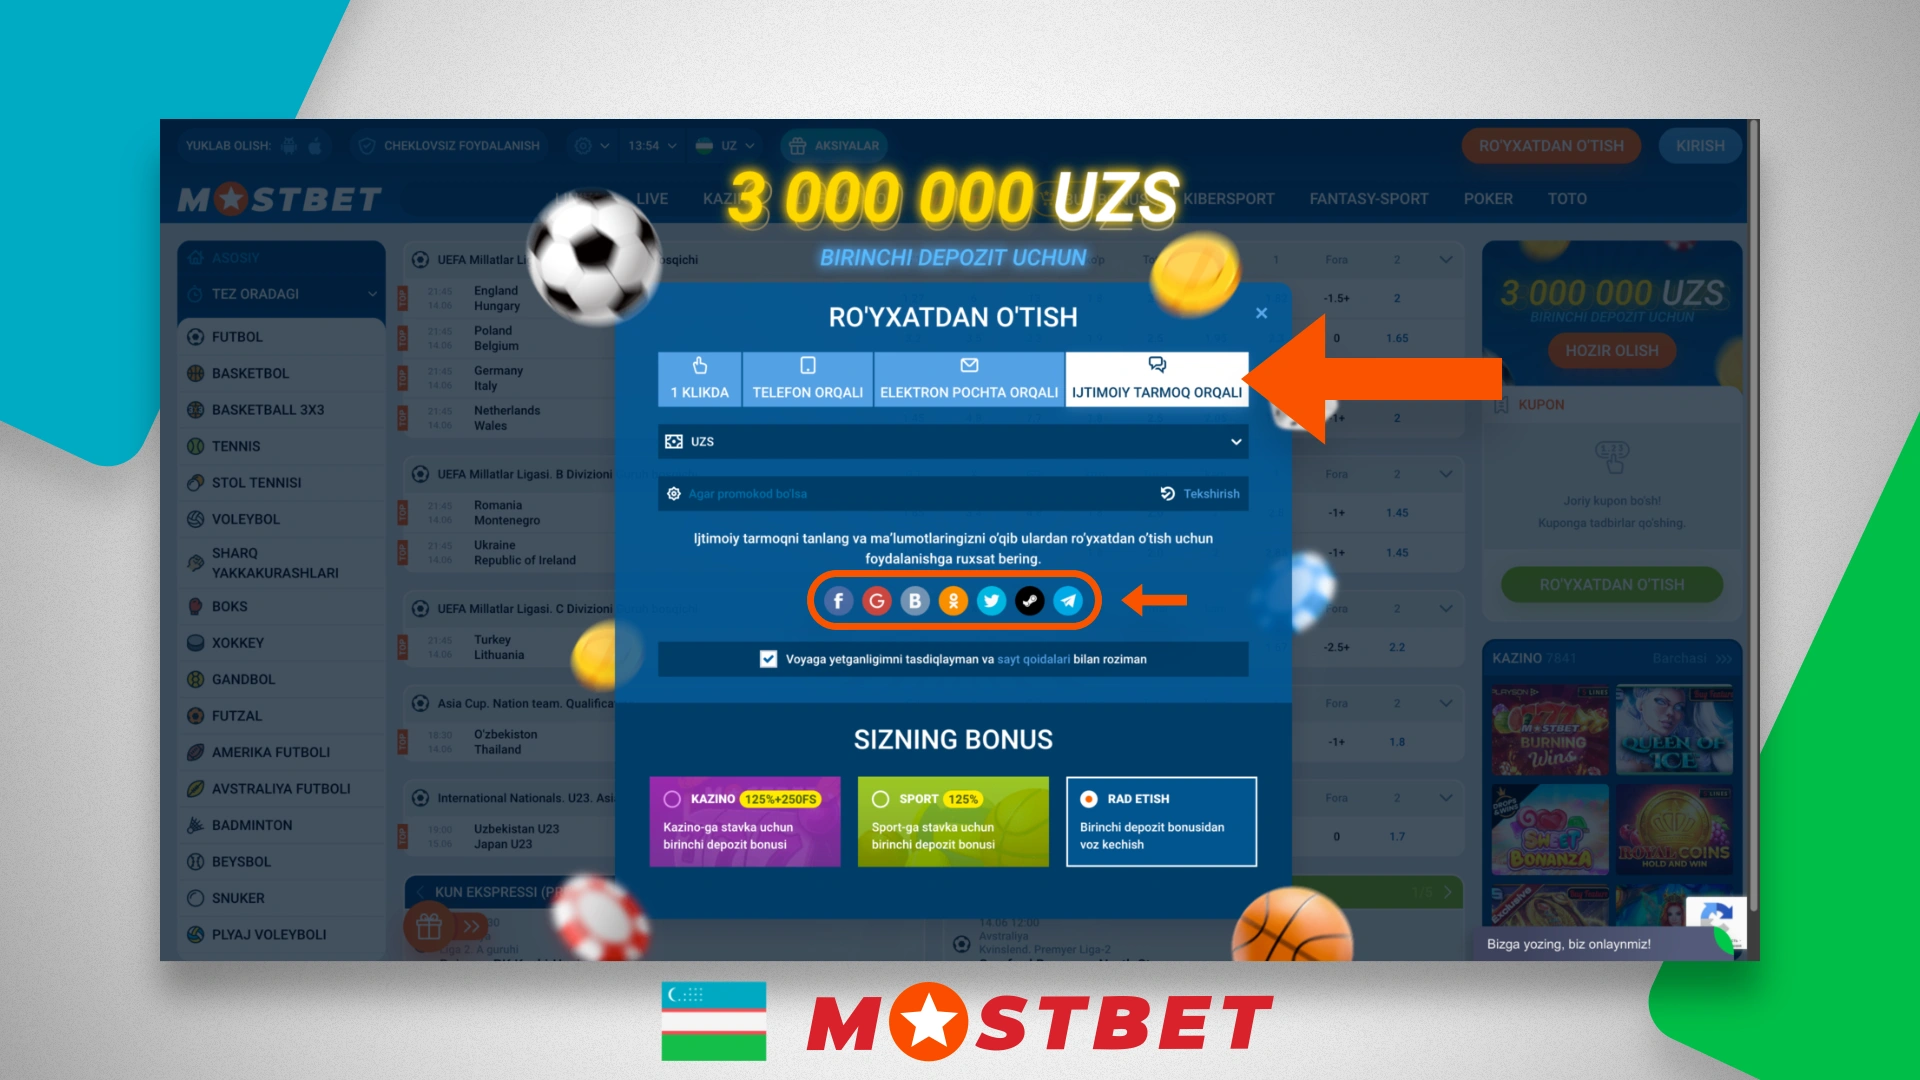 Ways to register on the Mostbet Uzbekistan website